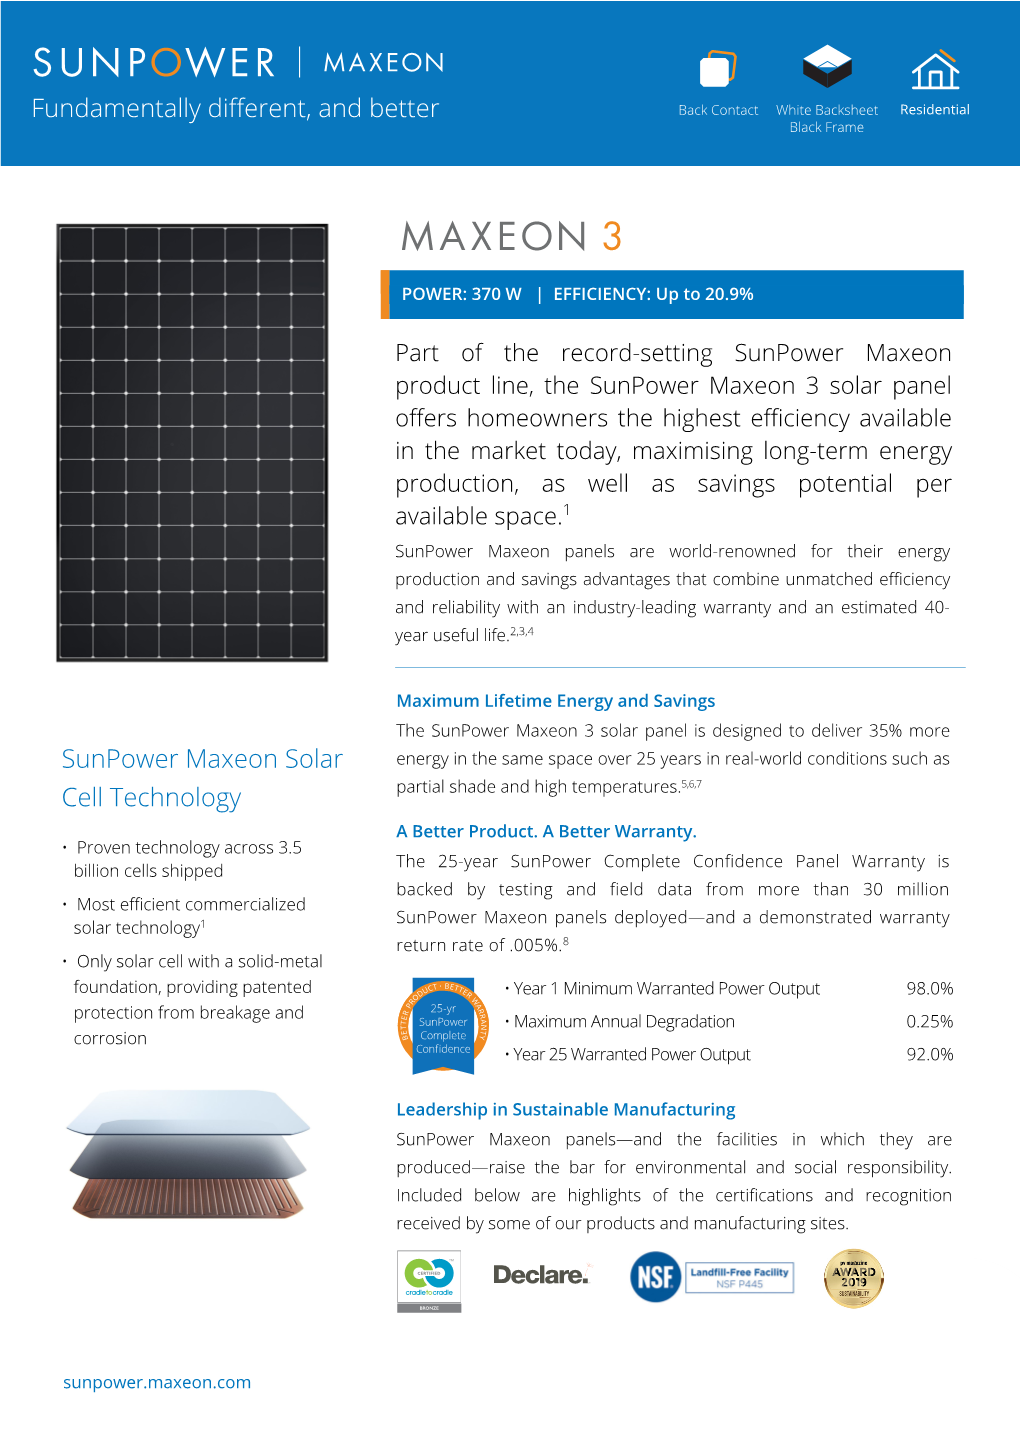 Sunpower Maxeon Solar Cell Technology